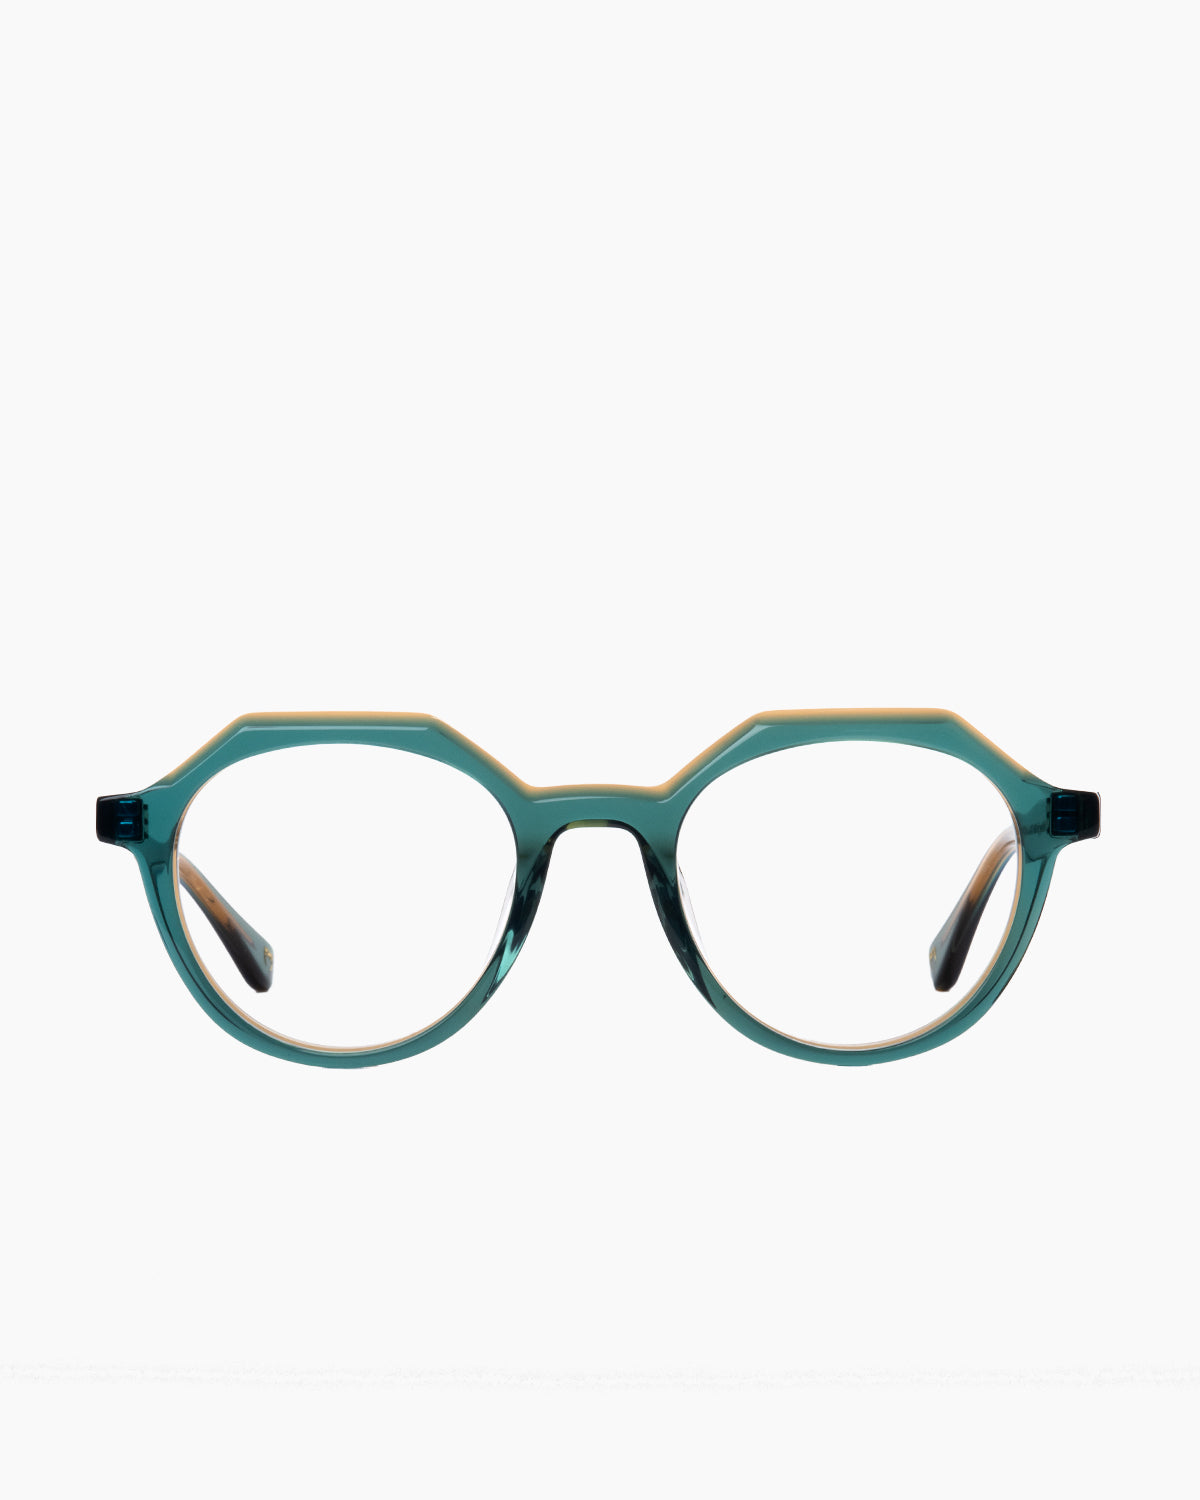 Spectacleeyeworks - Anita - c736 | Bar à lunettes